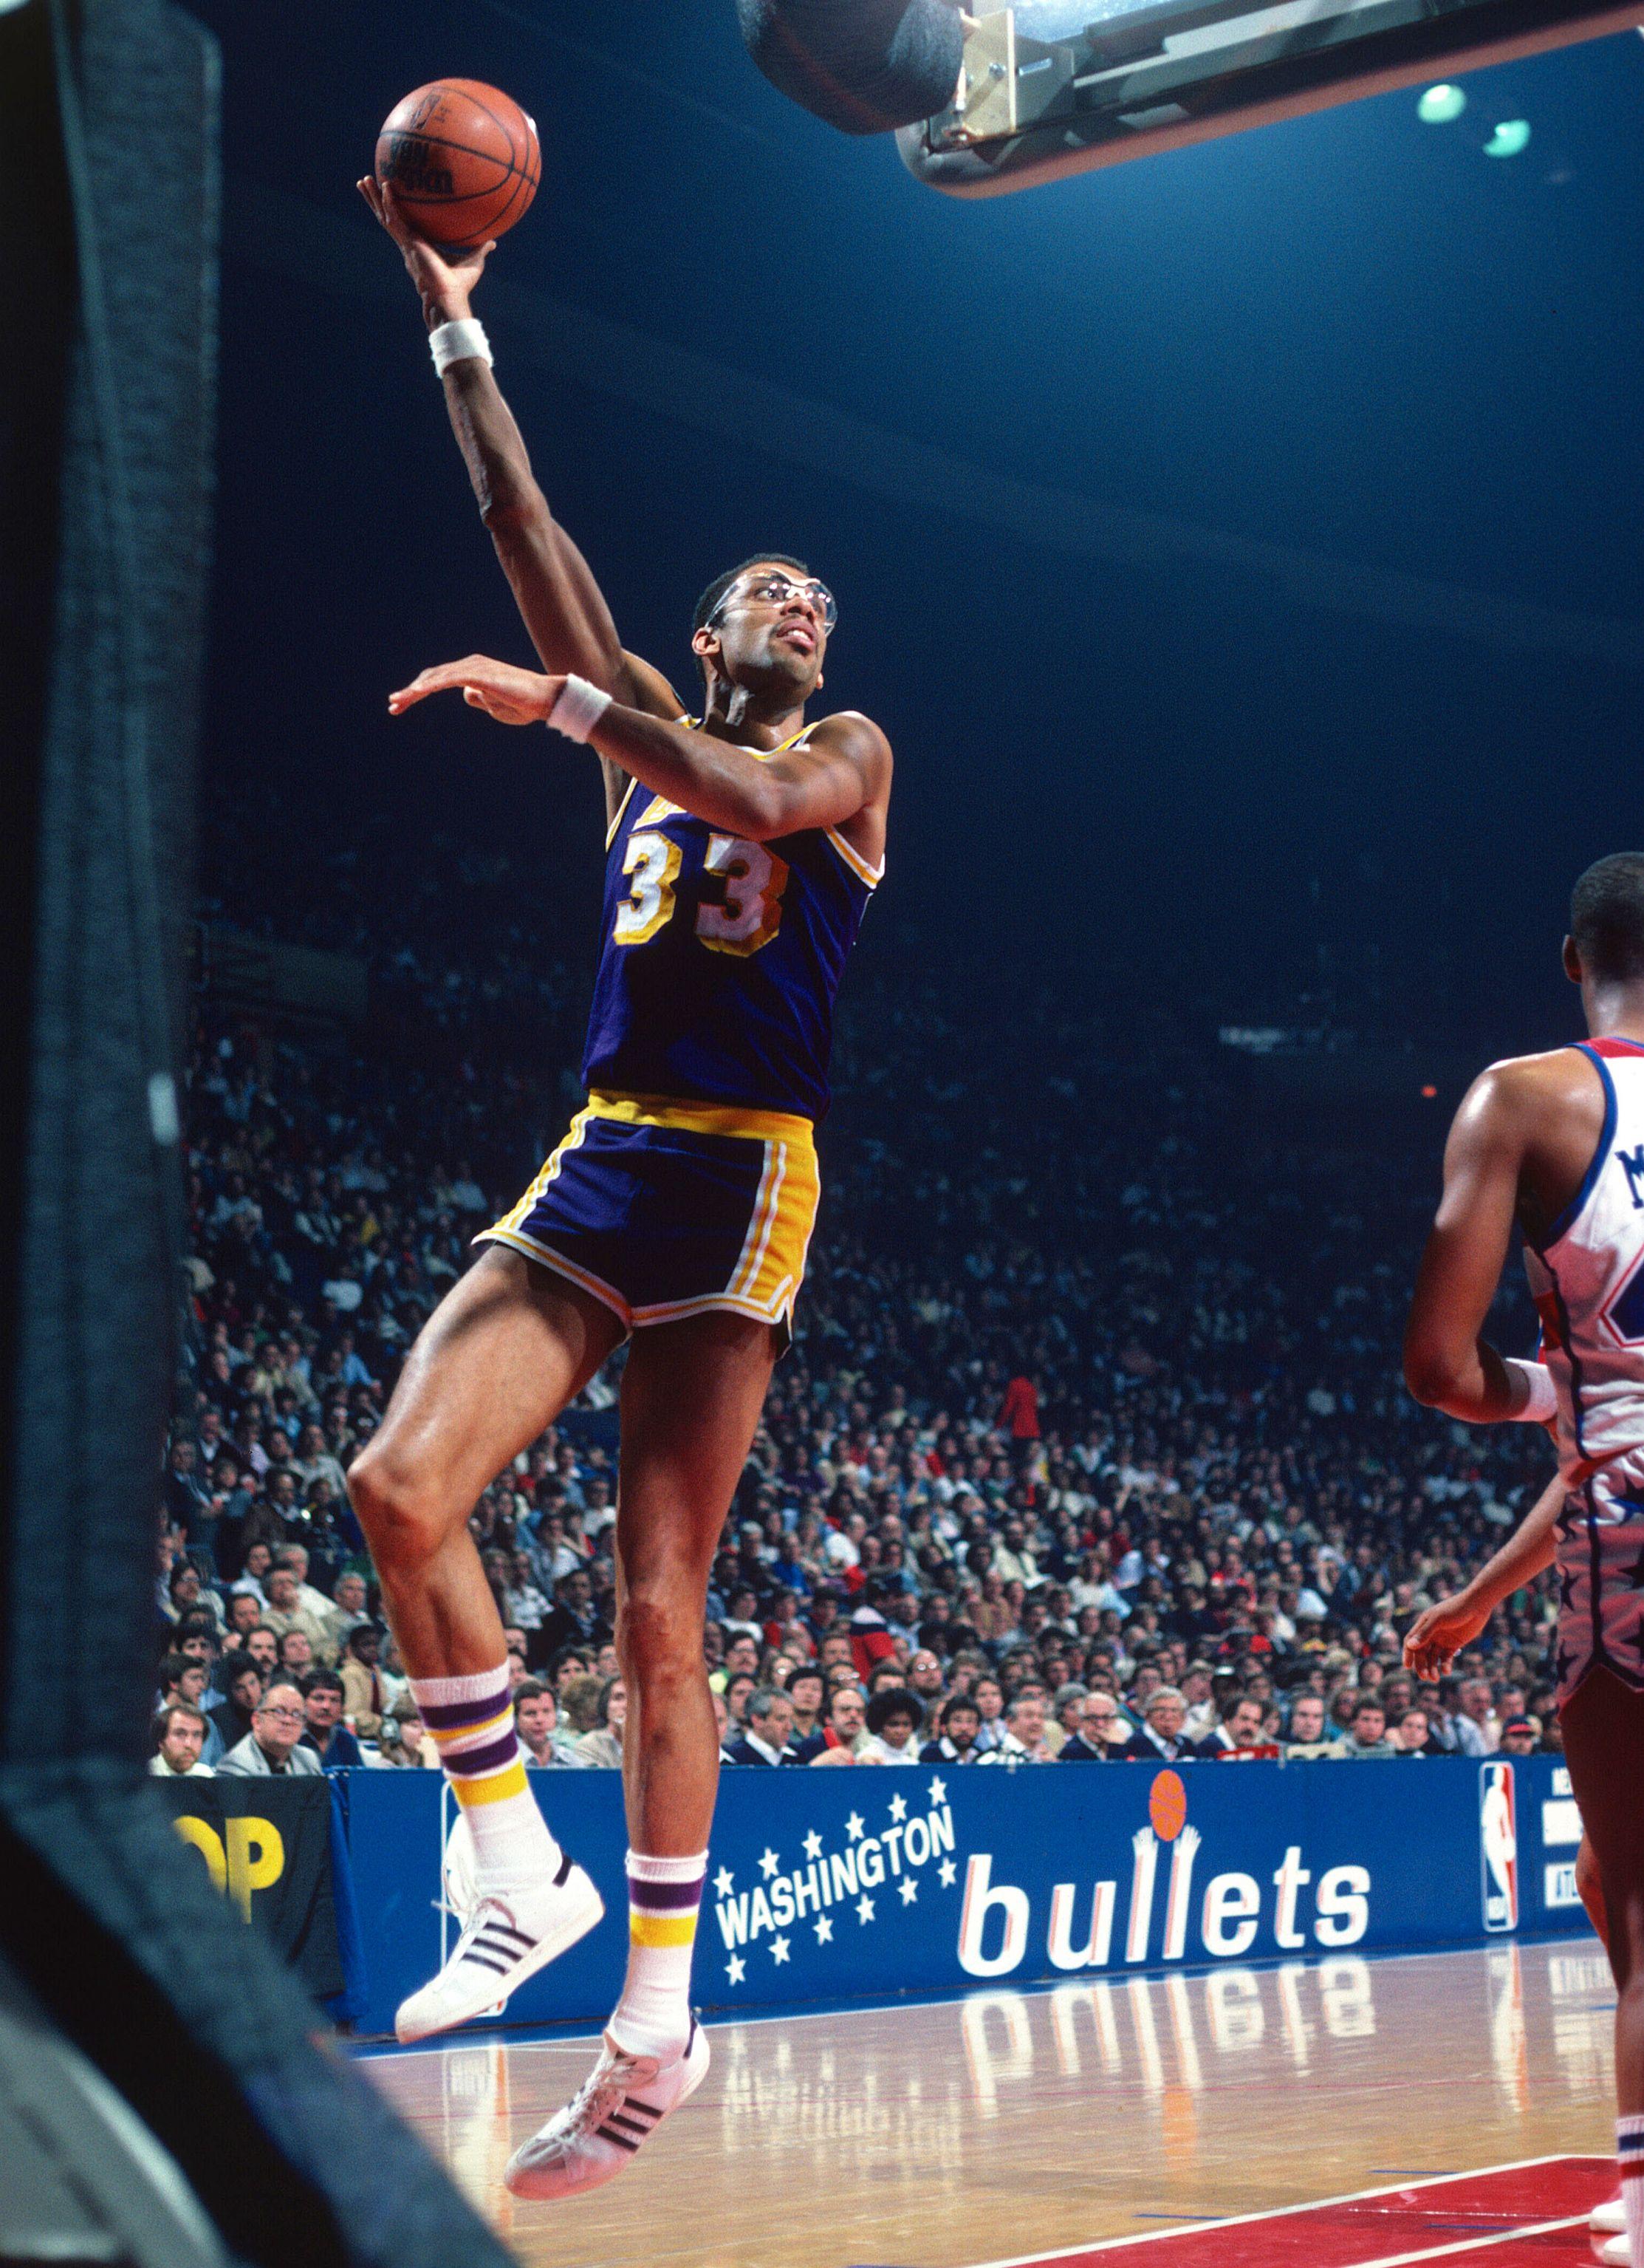 2. Kareem Abdul Jabbar: 10 Greatest NBA Players Ever